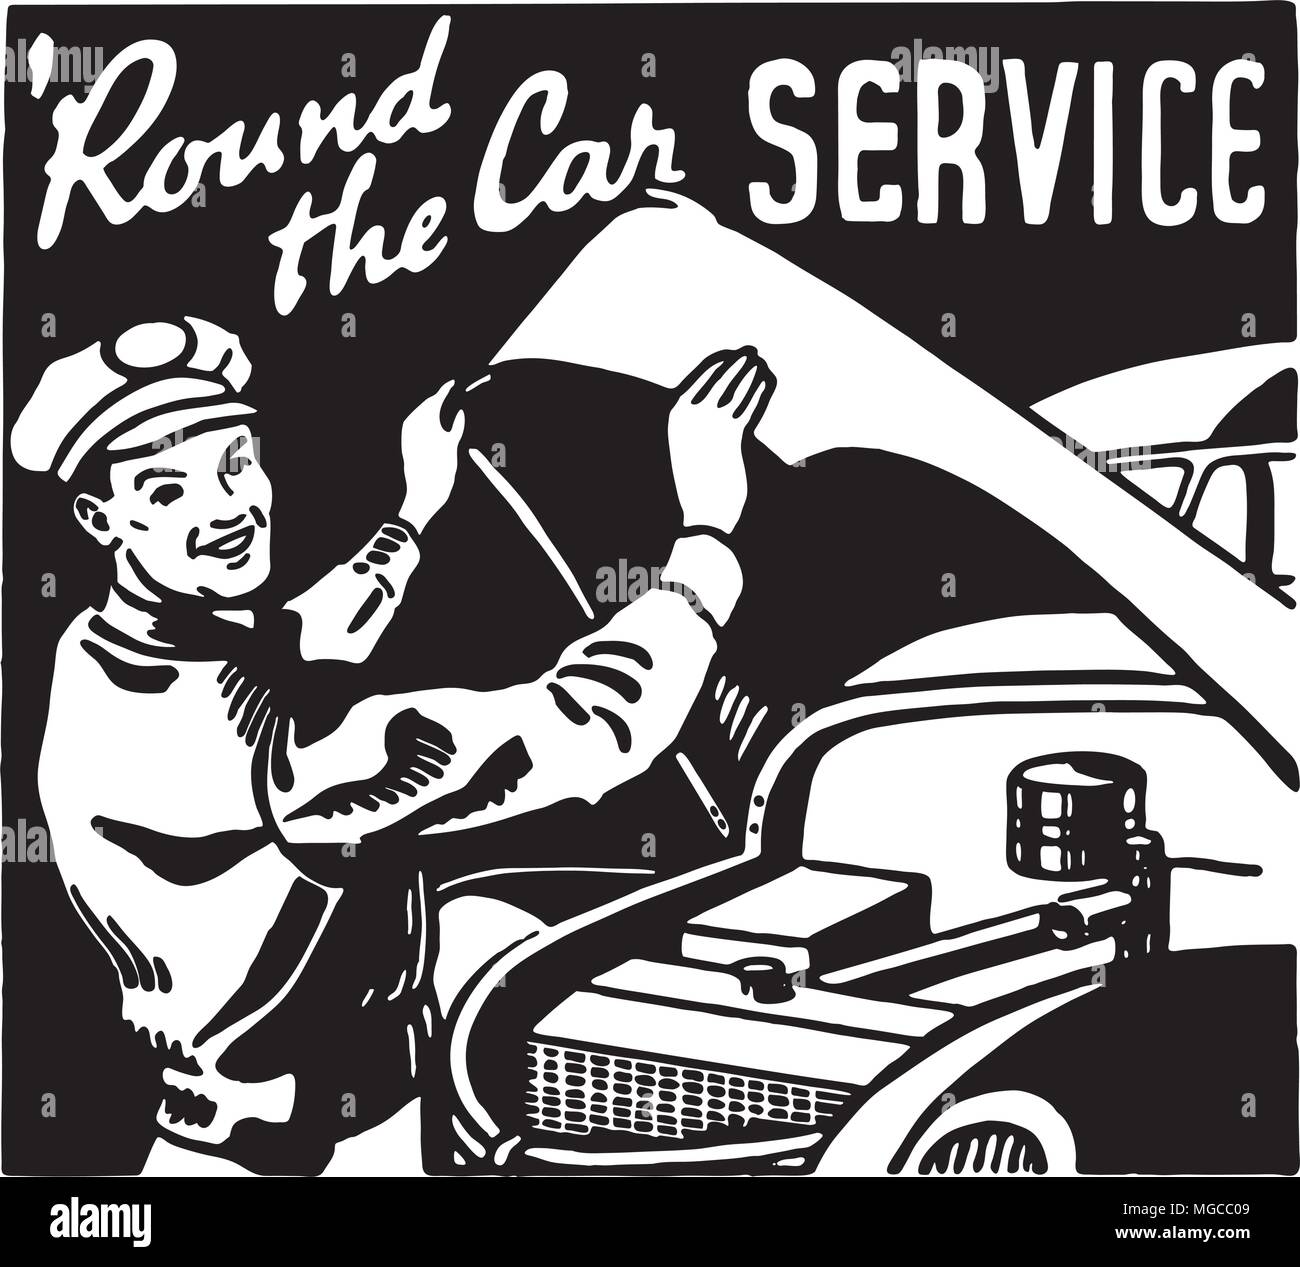 Round The Car Service 3 - Retro Ad Art Banner Stock Vector